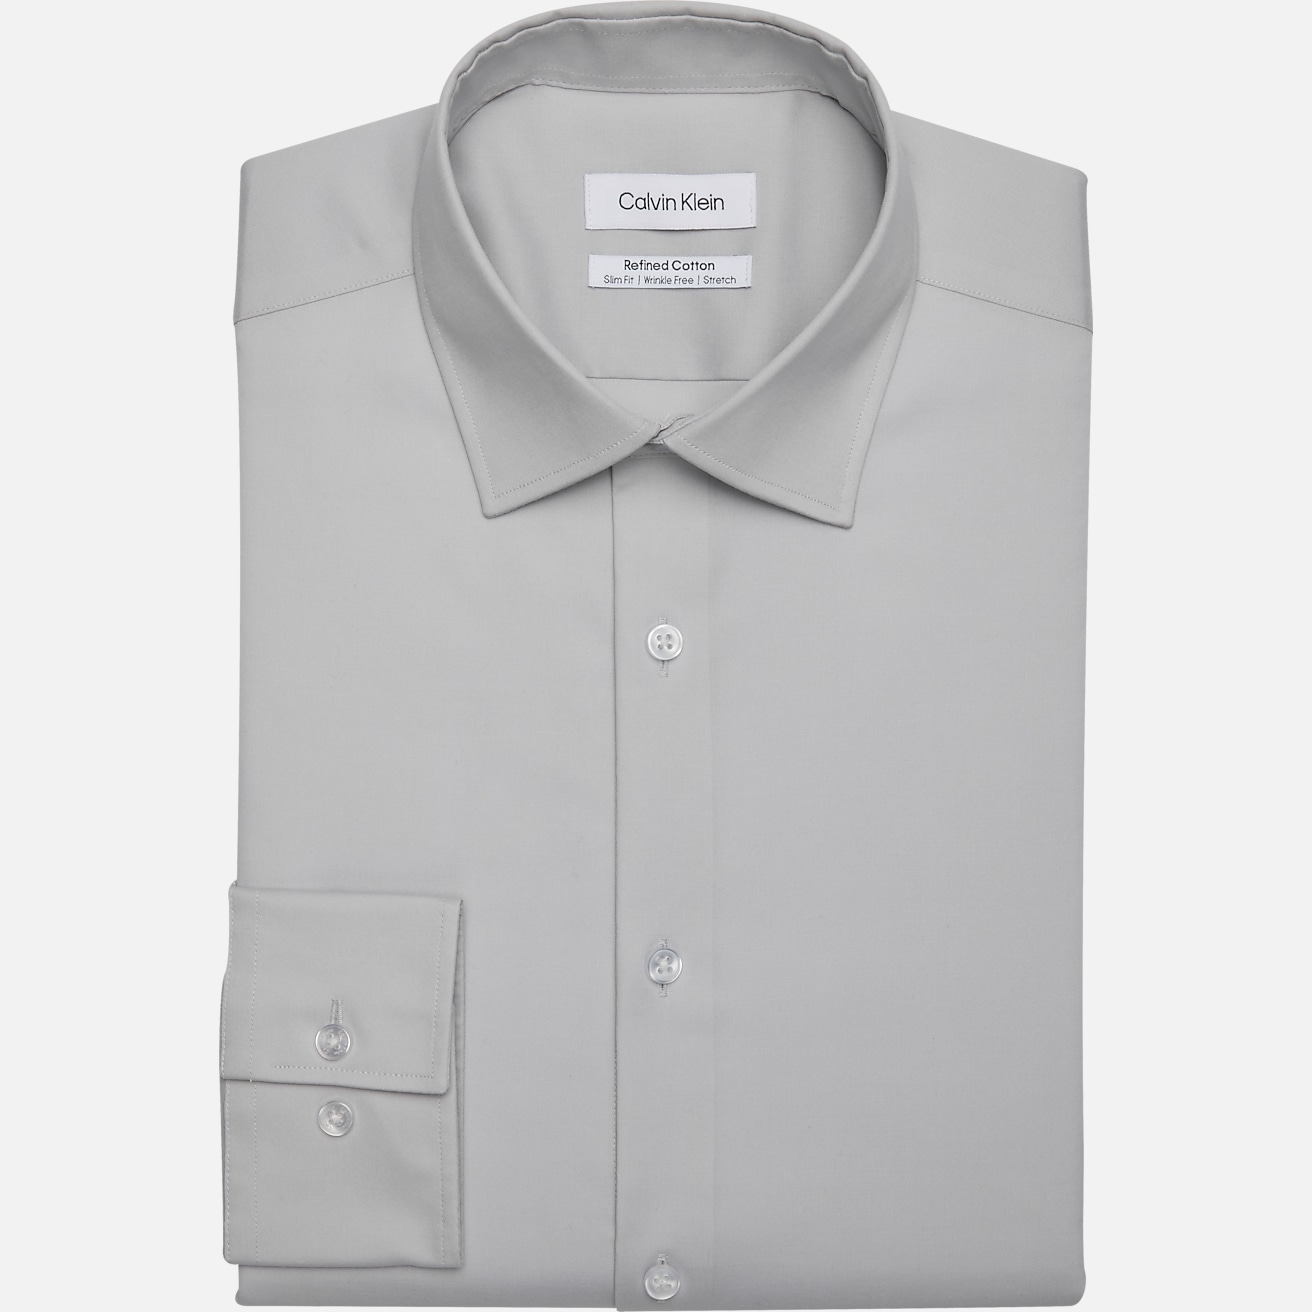 Calvin Klein Refined Cotton Slim Fit Spread Collar Dress Shirt, Clearance  Dress Shirts